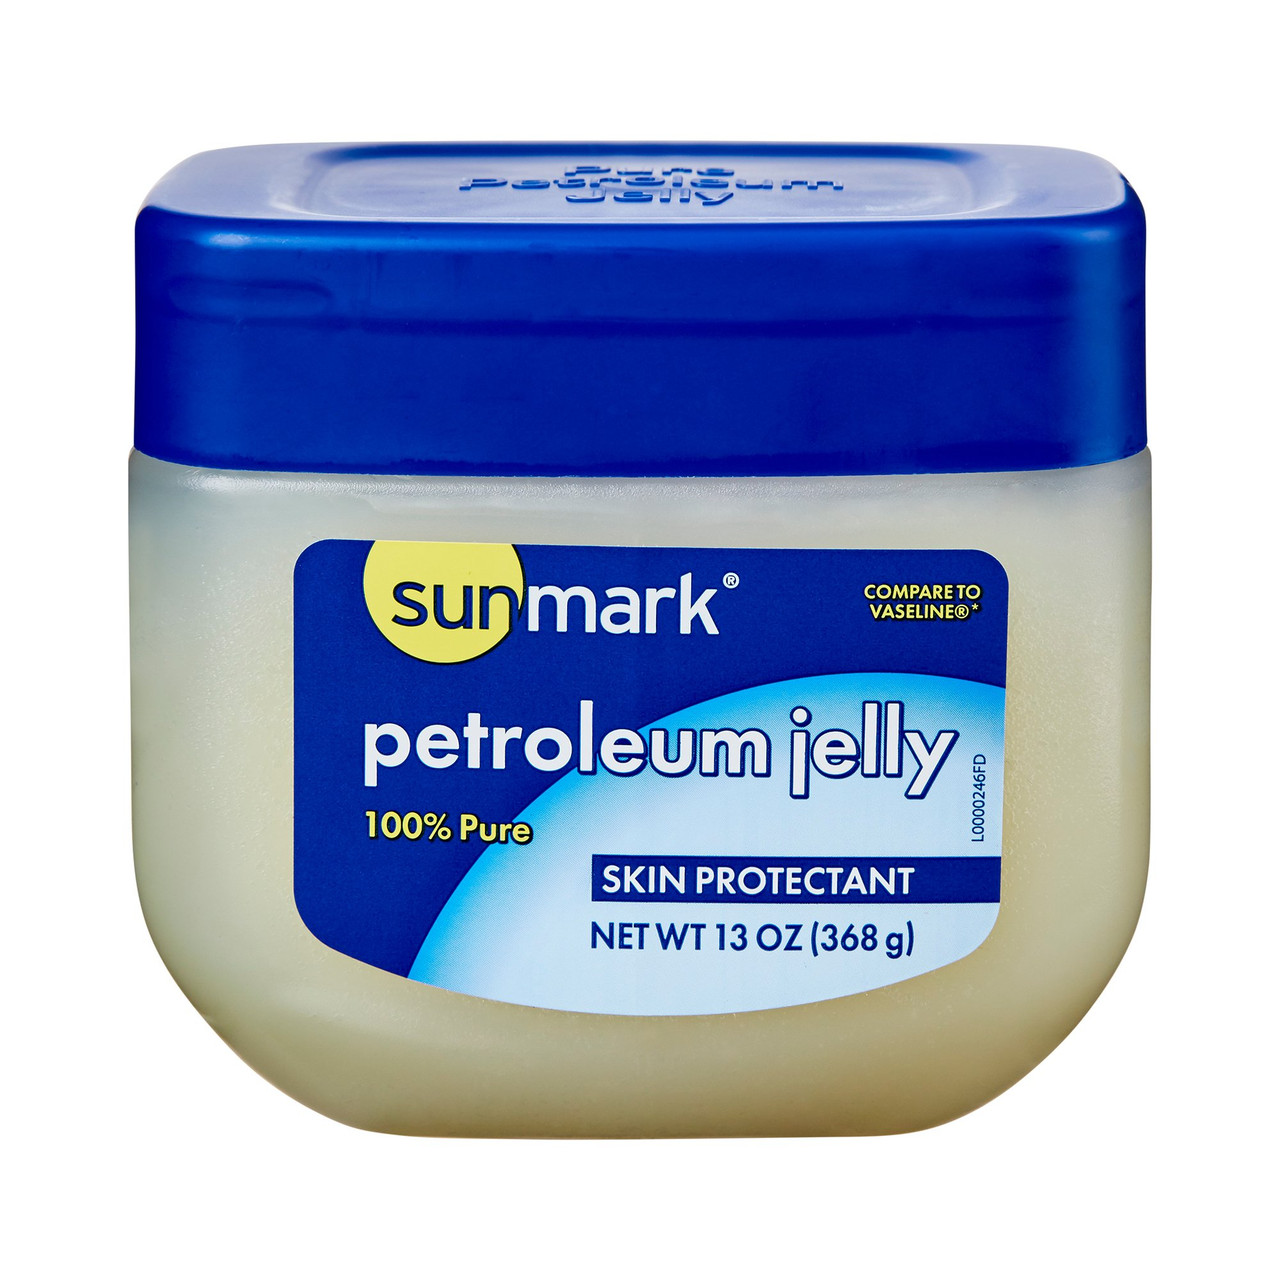 Вазелин. Шампунь вазелин. Vaseline Jelly Pure Skin Original Skin Protectant. Petroleum jelly